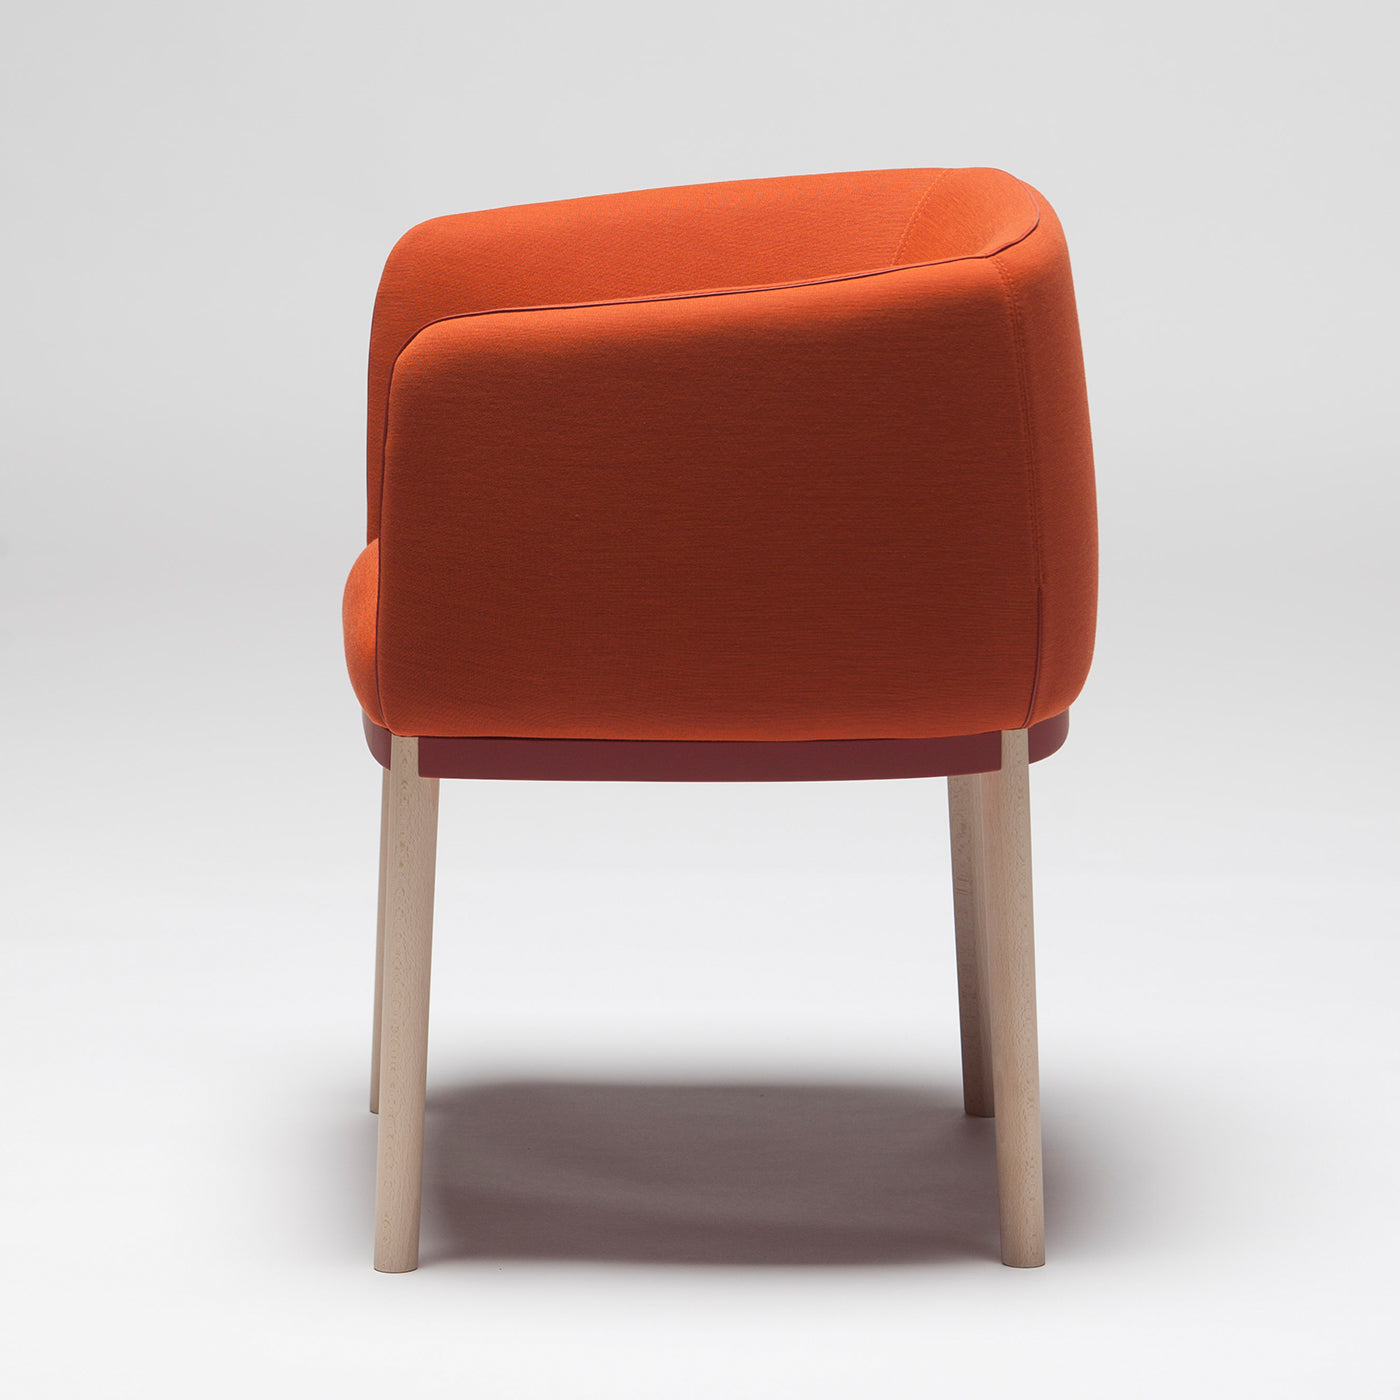 Cape 809 Orange Chair by Debiasi Sandri - Tekhne Collection - Alternative view 1